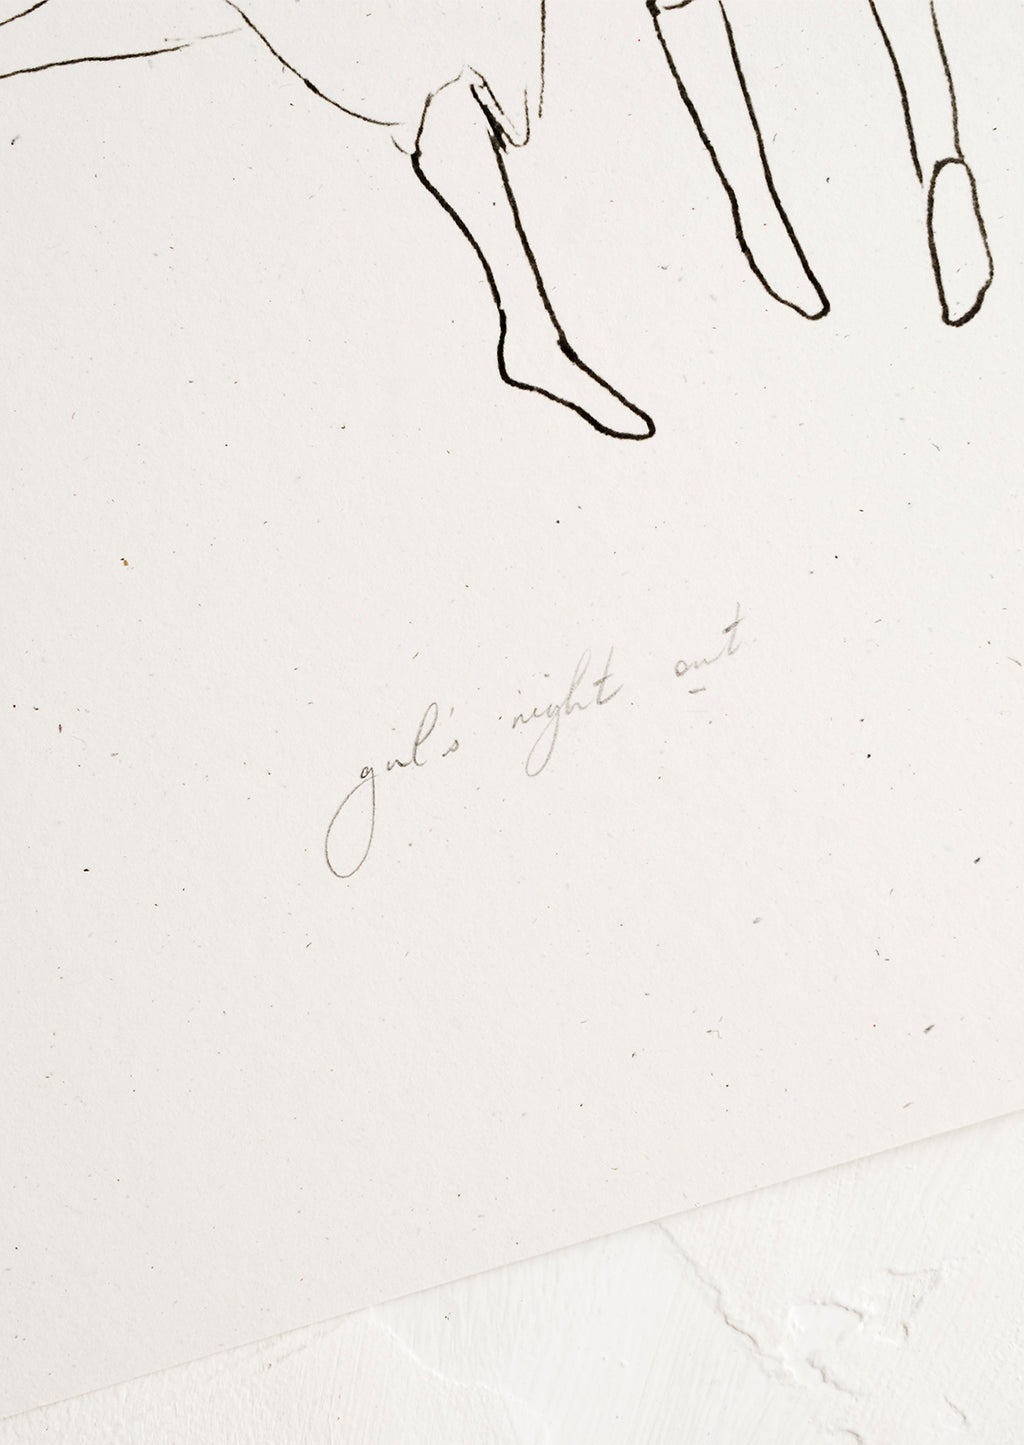 2: Detail of artist's signature in pencil.